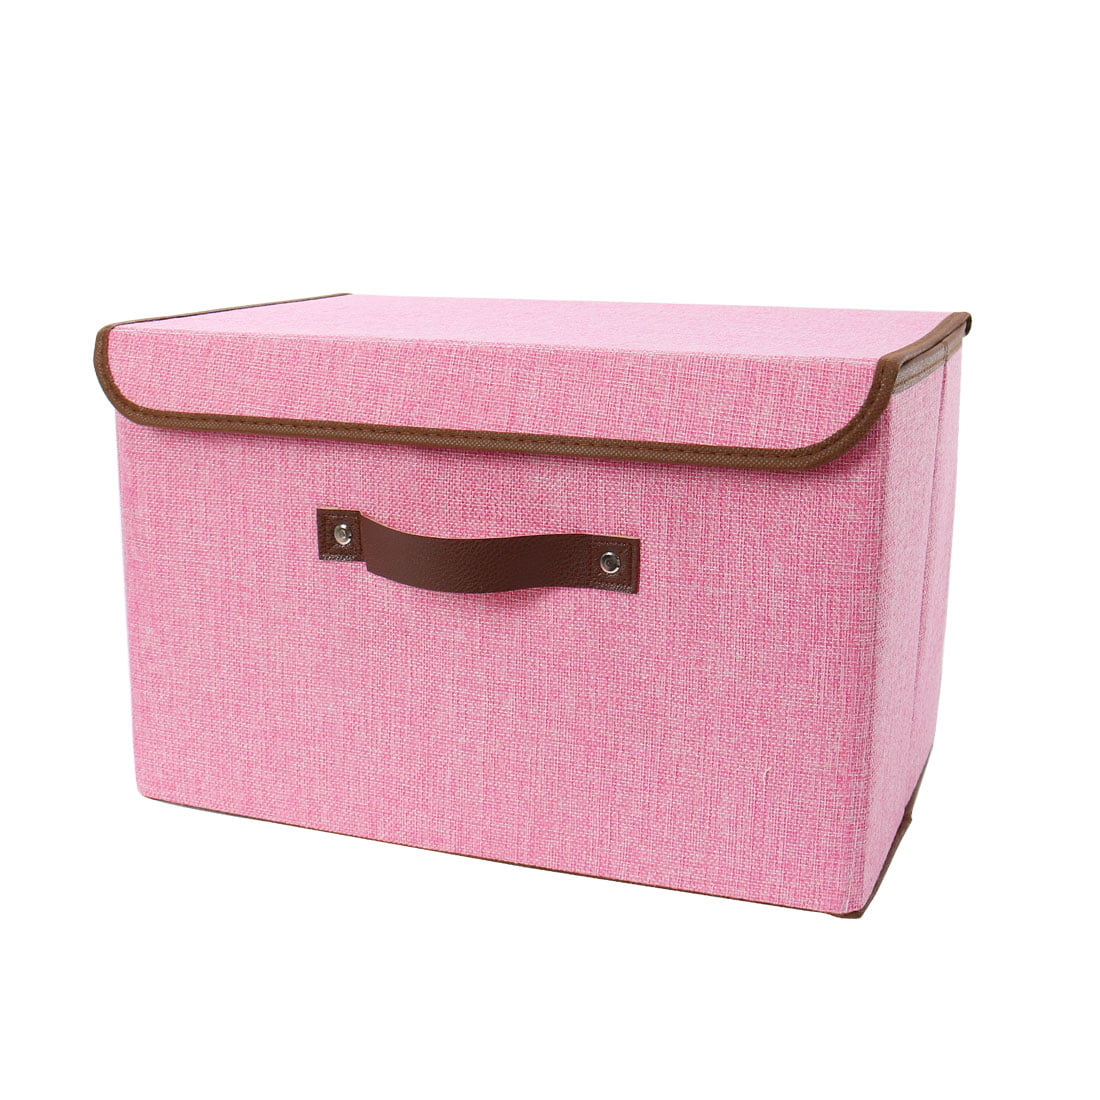 Fabric Storage Bin Cube Small Basket, Small Fabric Storage Bins For Shelves